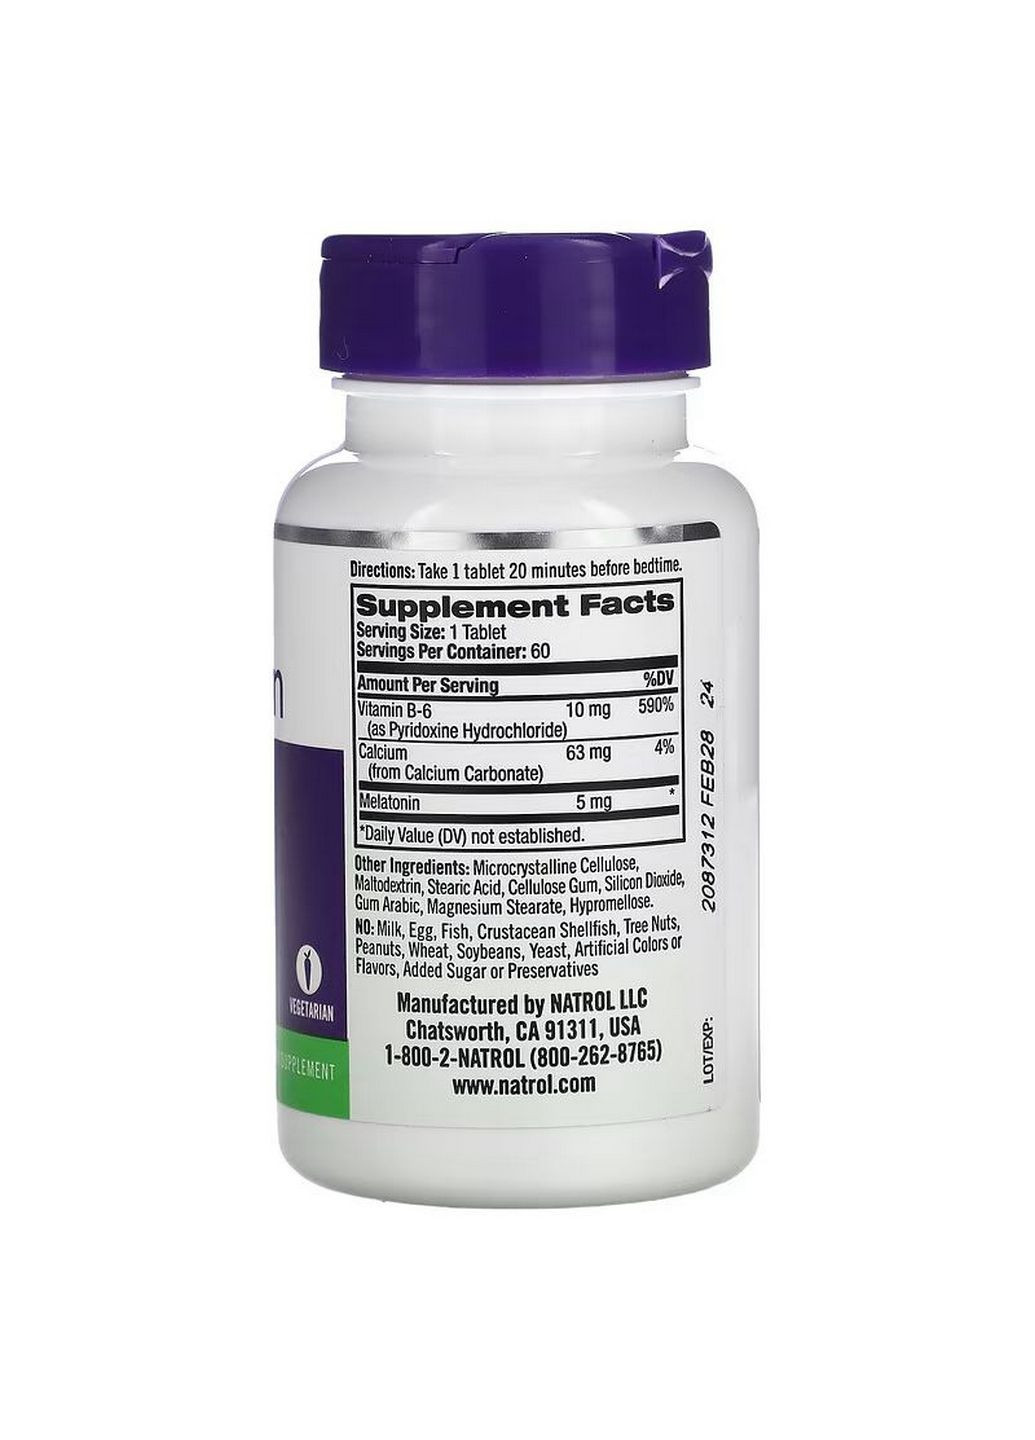 Натуральна добавка Melatonin 5 mg Extra Strength, 60 таблеток Natrol (293481226)